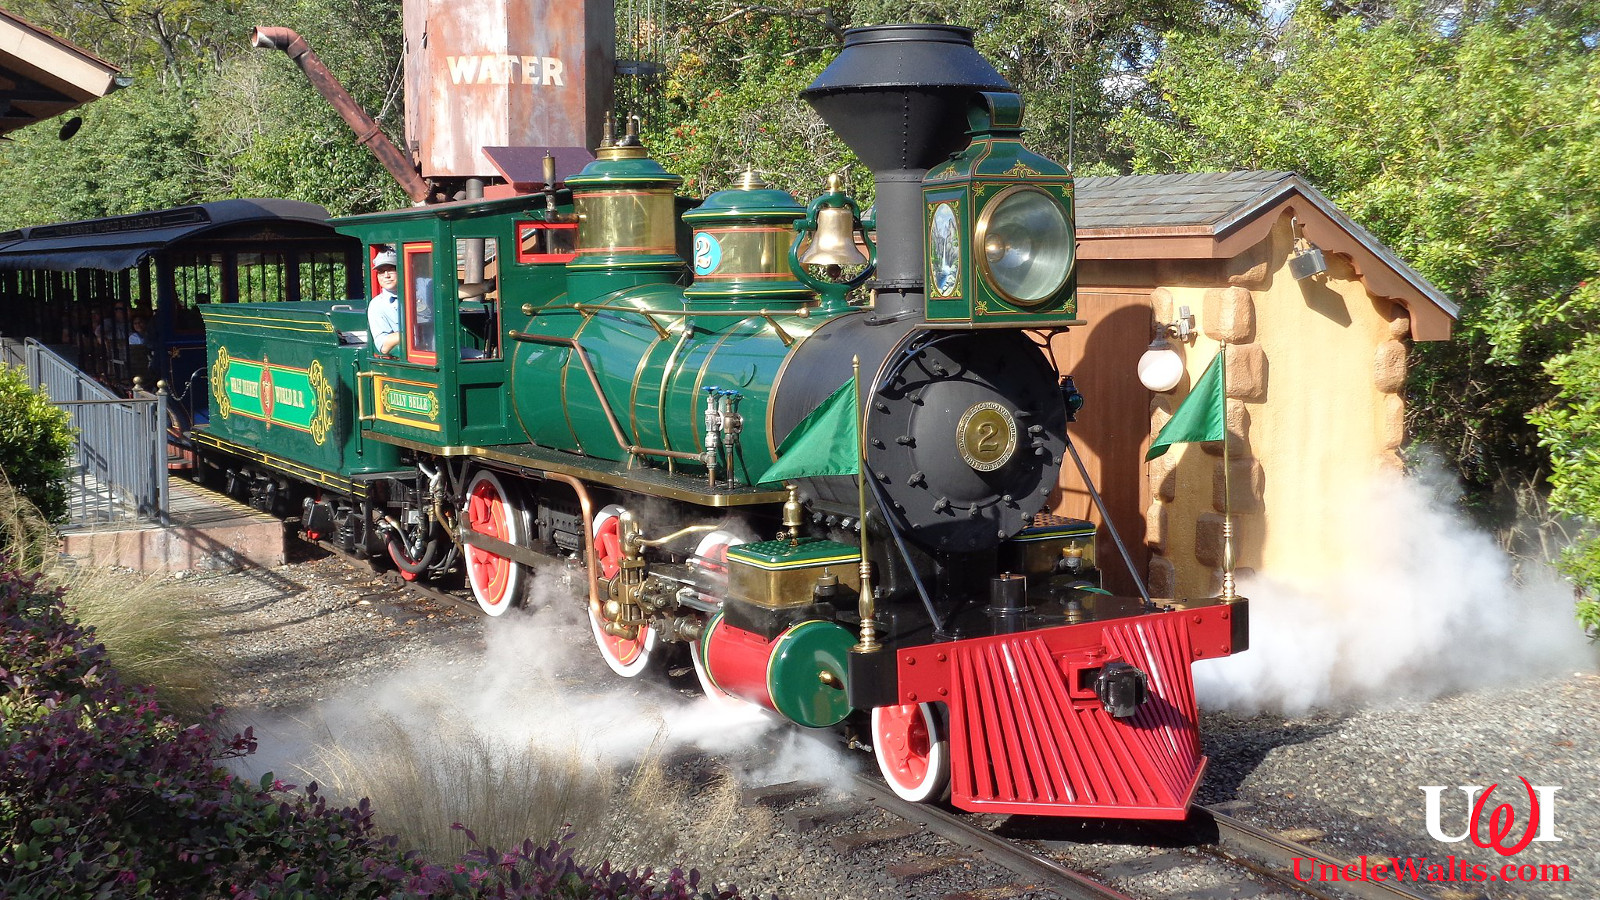 Walt Disney World Railroad to receive Tron overlay steam locomotive diagram 